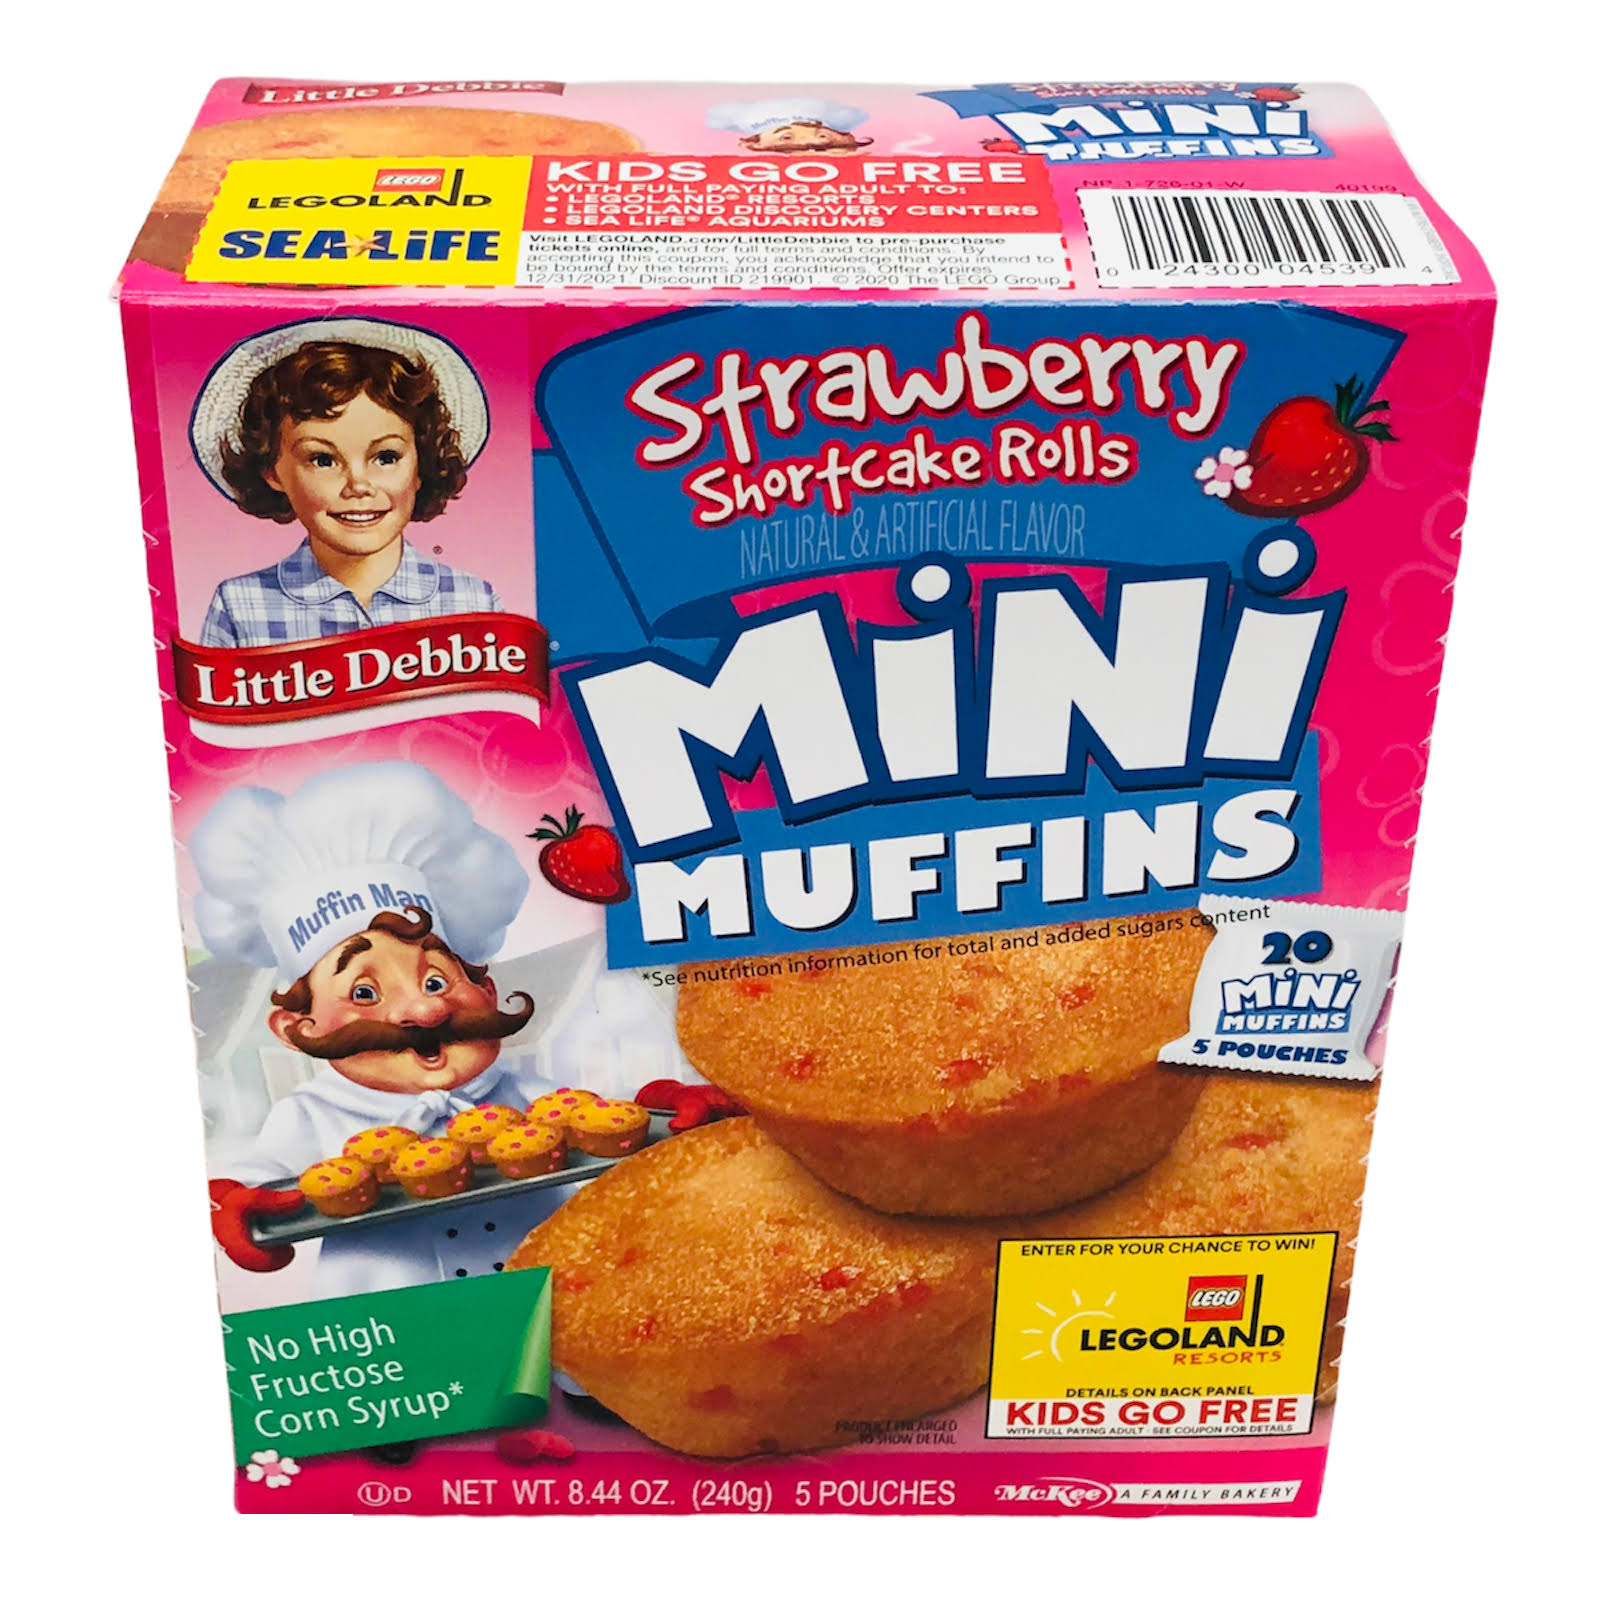 Little Debbie Muffins, Strawberry Shortcake Rolls, Mini - 5 pouches, 8.44 oz